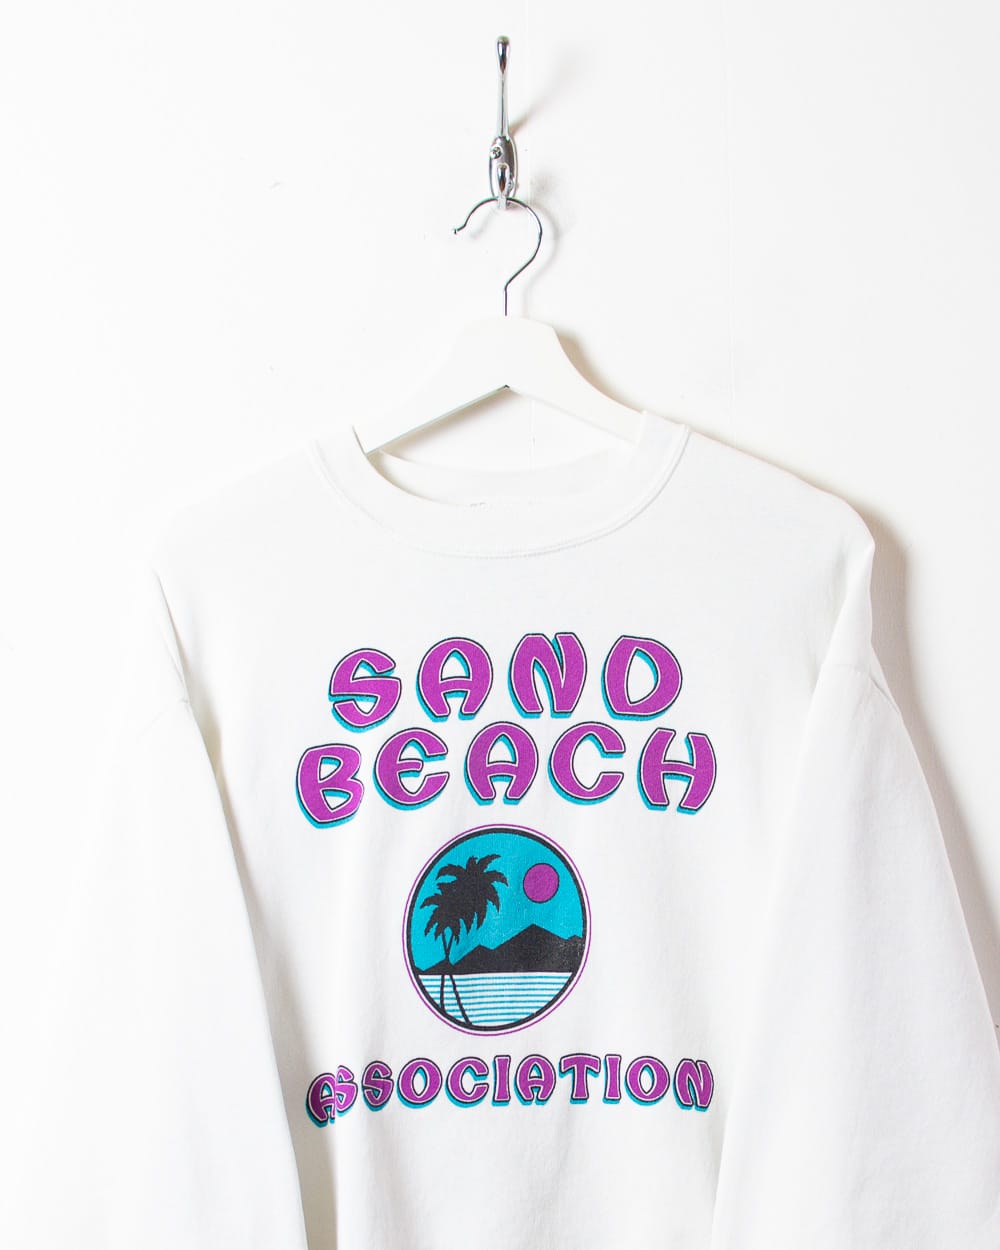 White Sand Beach Association Sweatshirt - Small